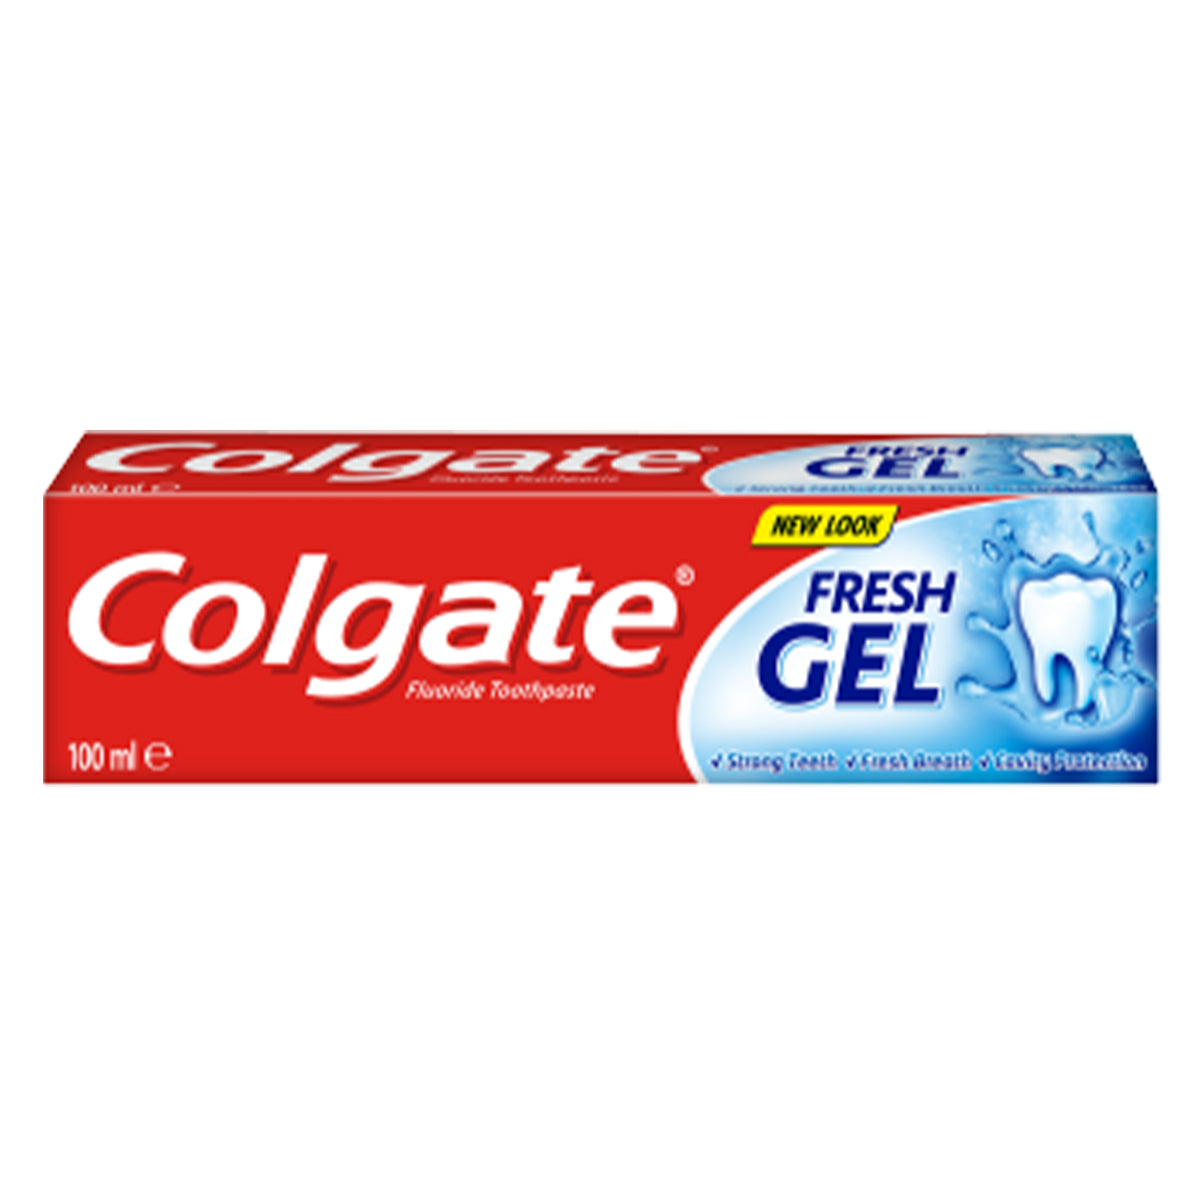 Colgate Fresh Gel 100ml toothpaste.